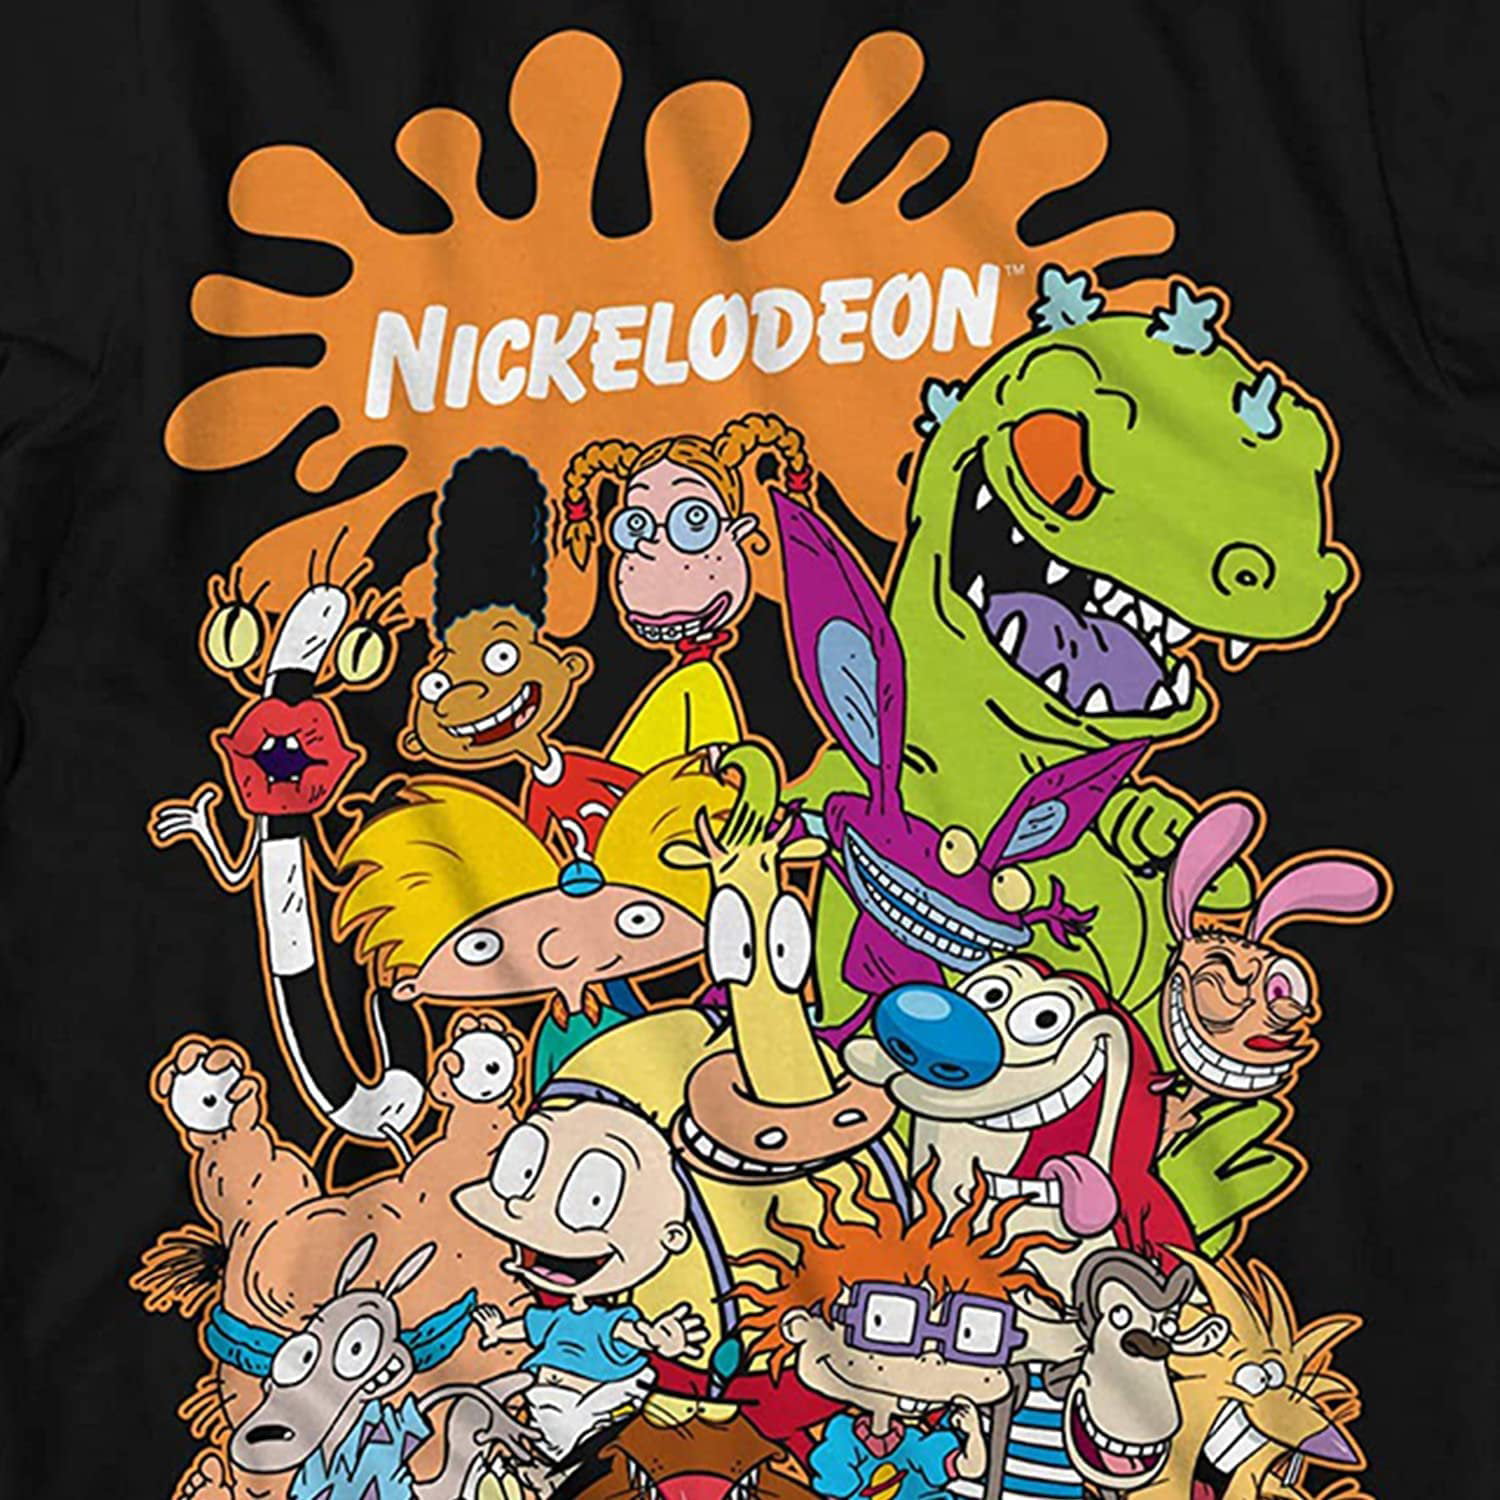 Airwaves Nickelodeon Men's Made in The 90's Graphic Tshirt - Black